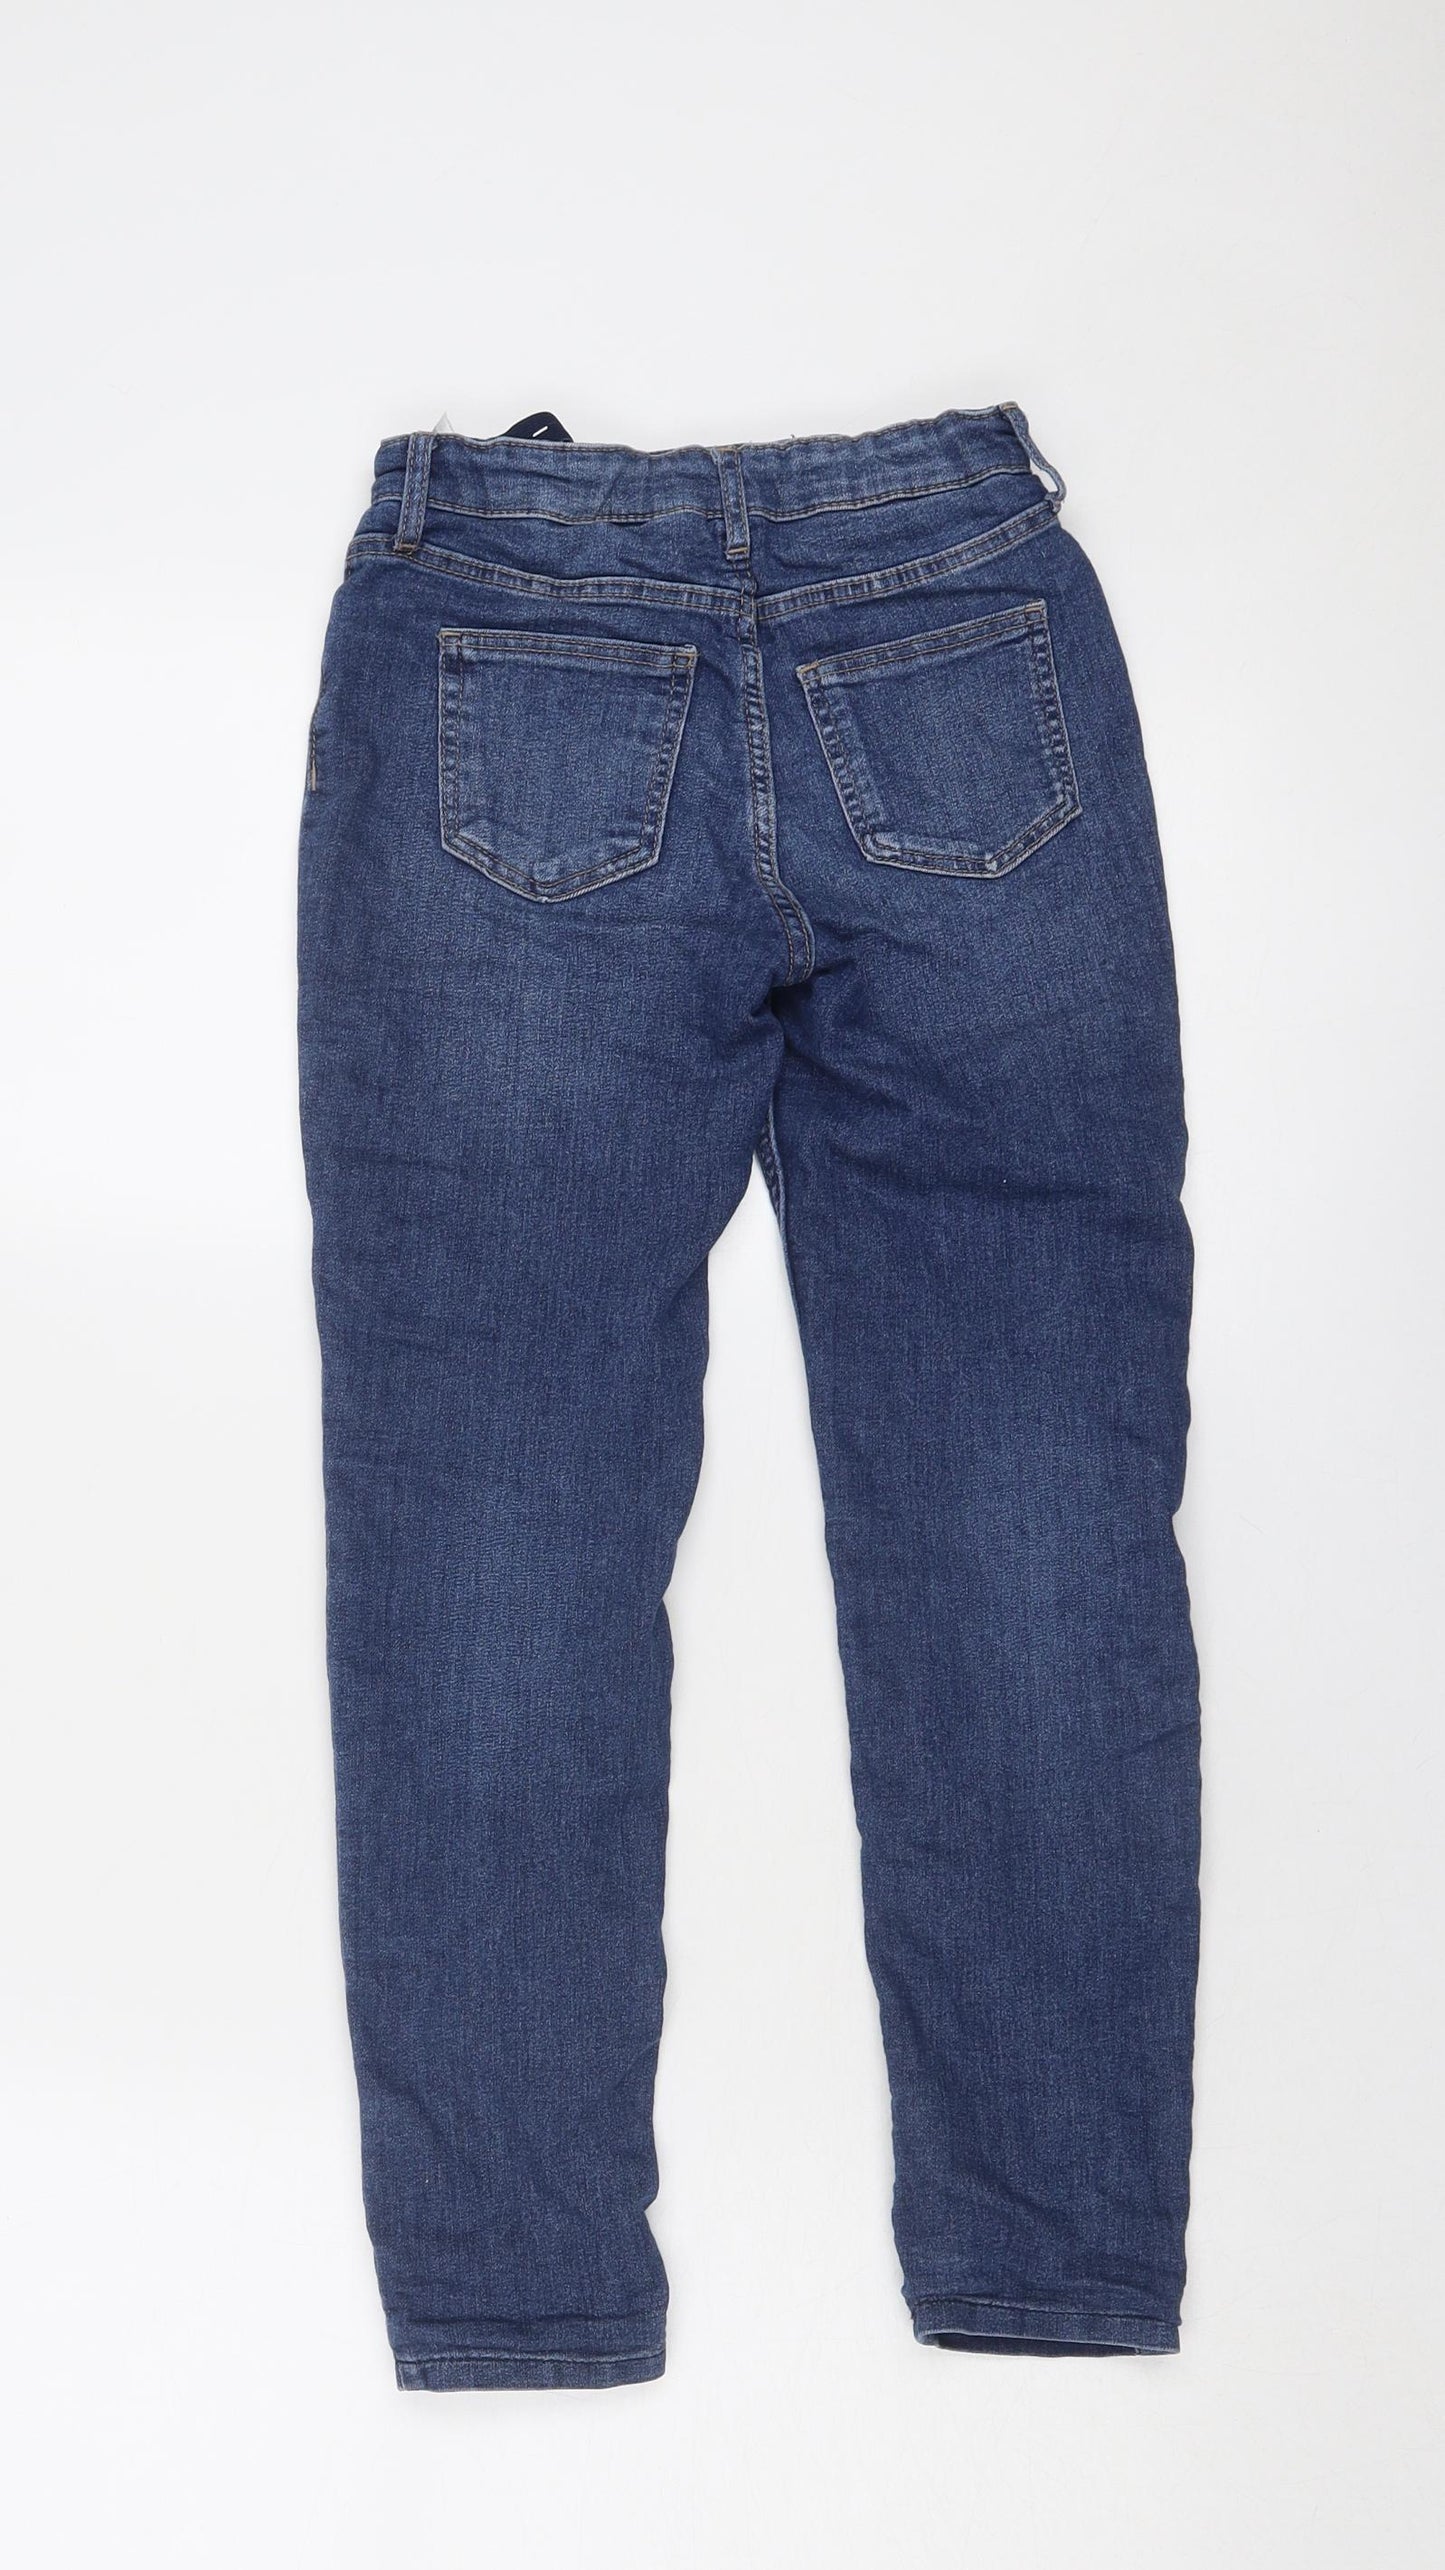 H&M Girls Blue Cotton Skinny Jeans Size 7-8 Years Regular Zip